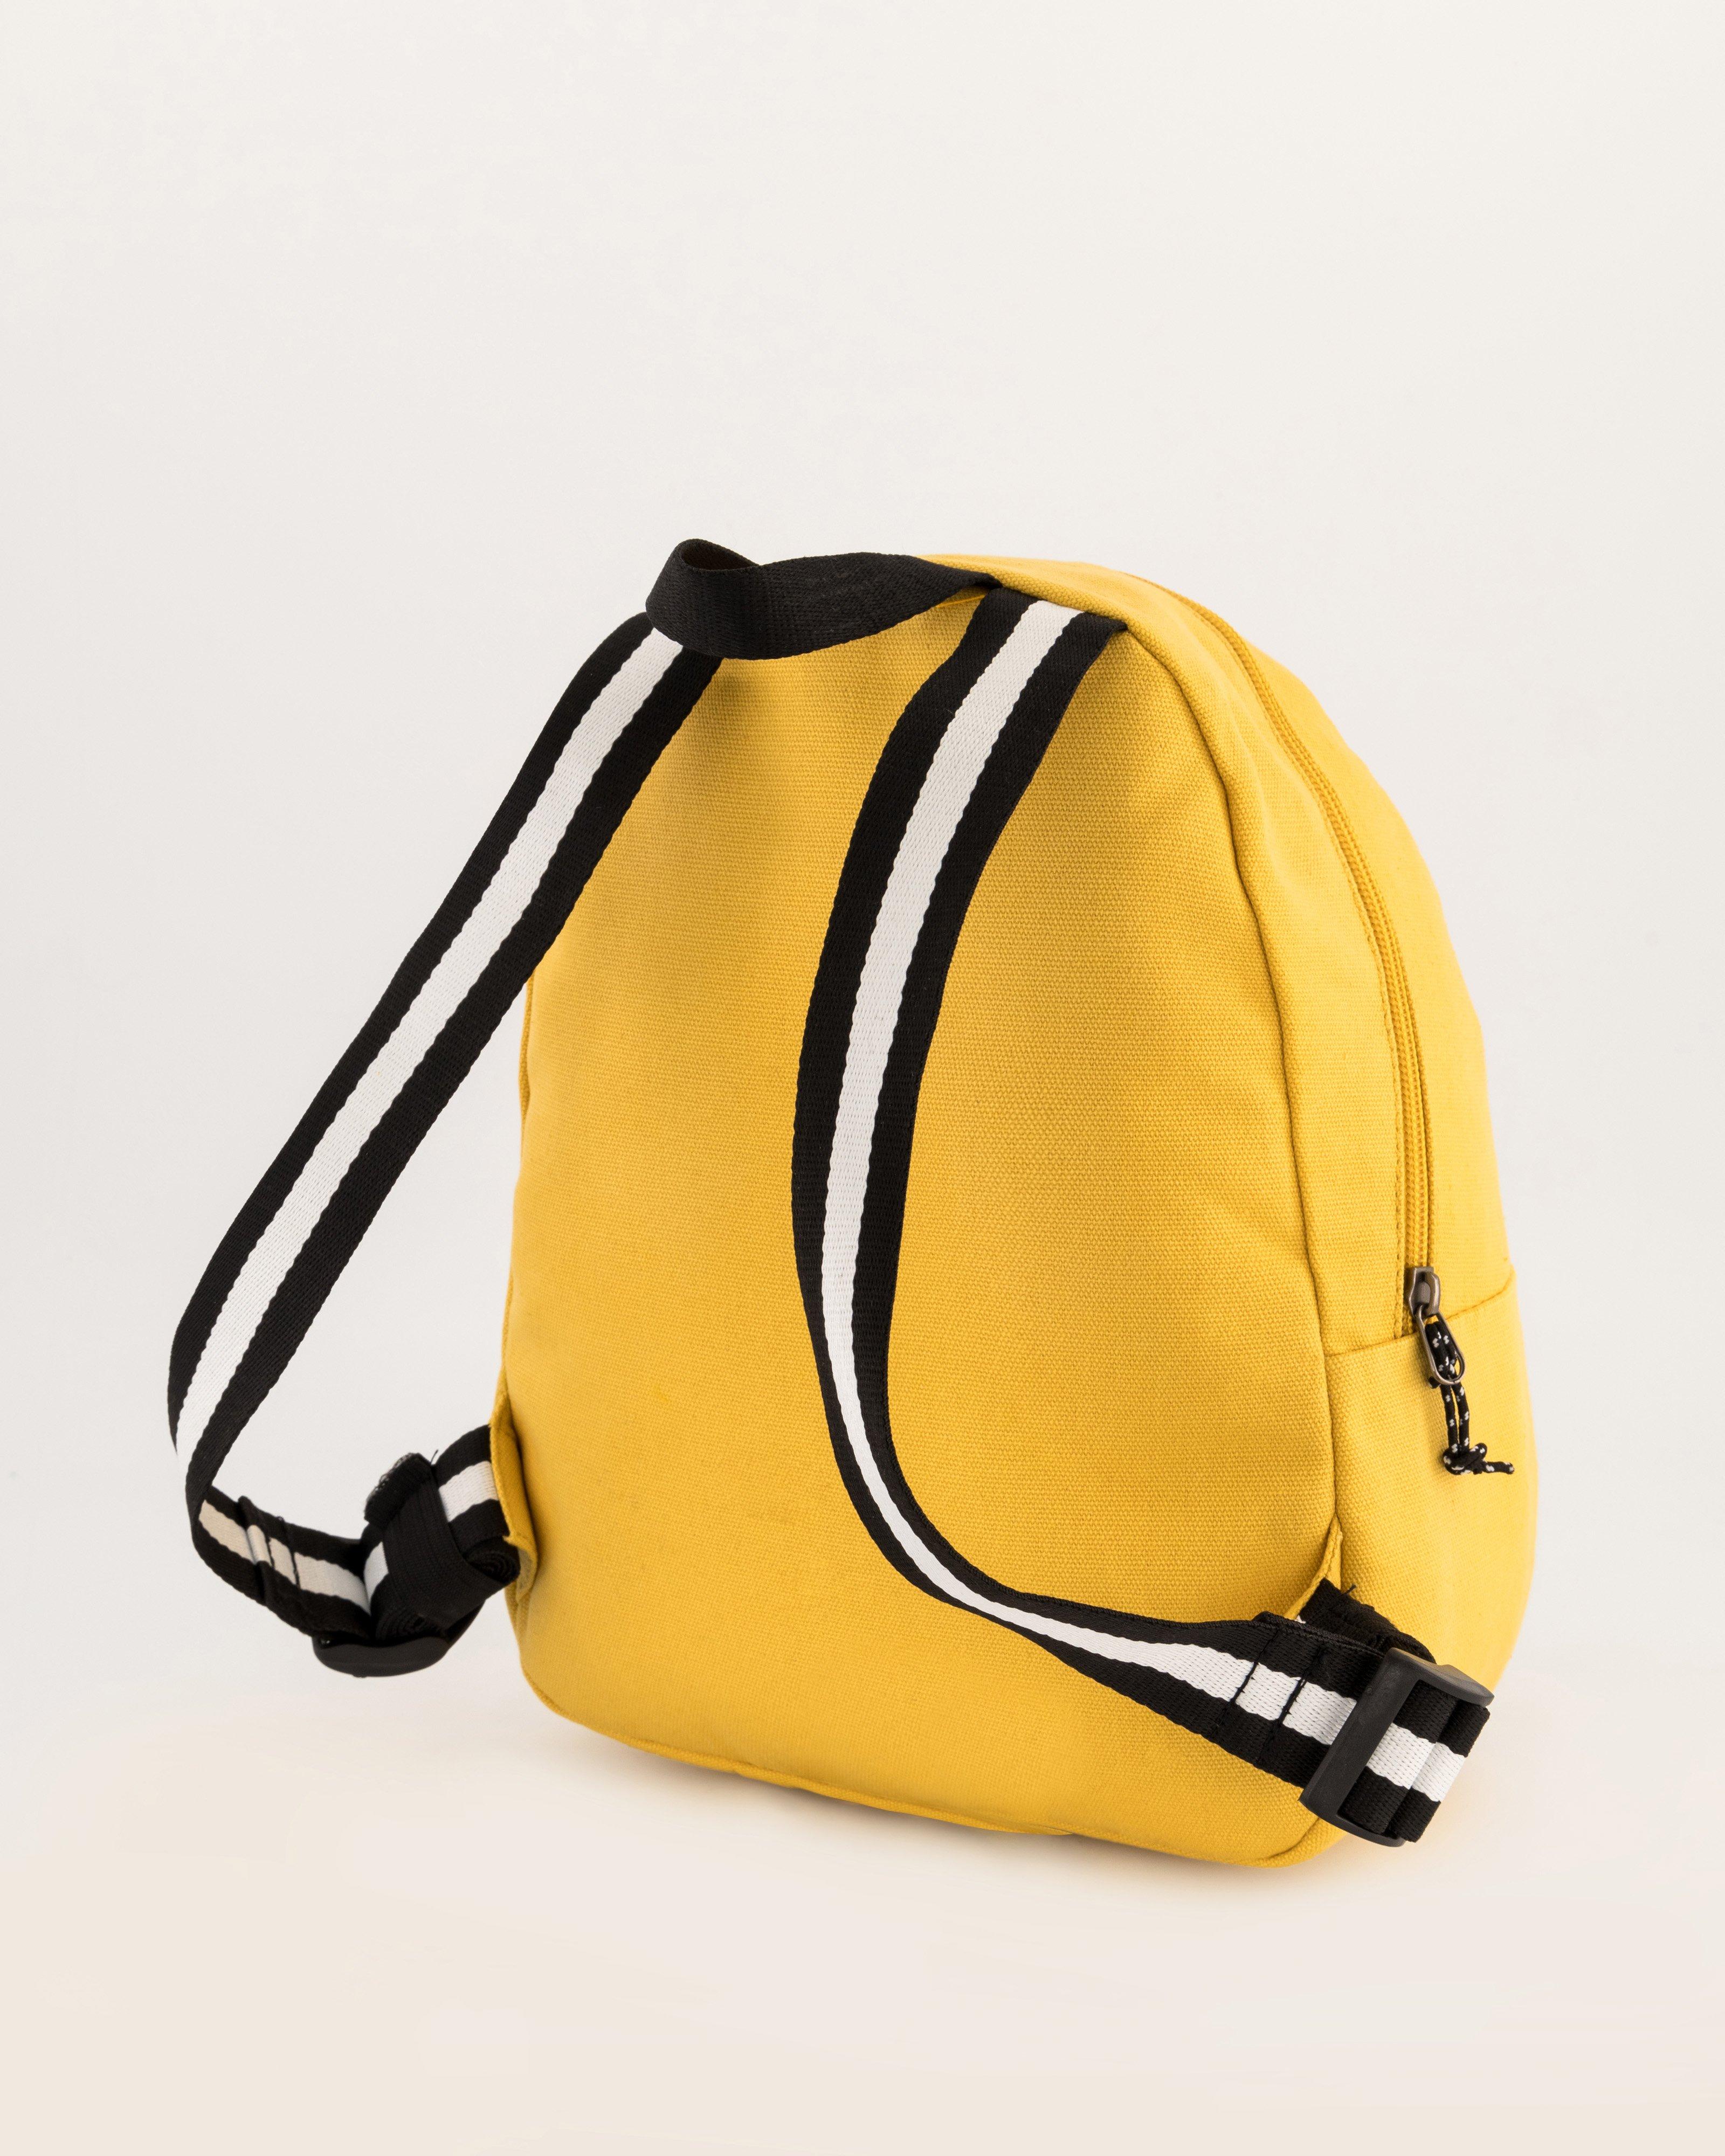 Travelon Coastal 17L RFID Backpack -  Yellow